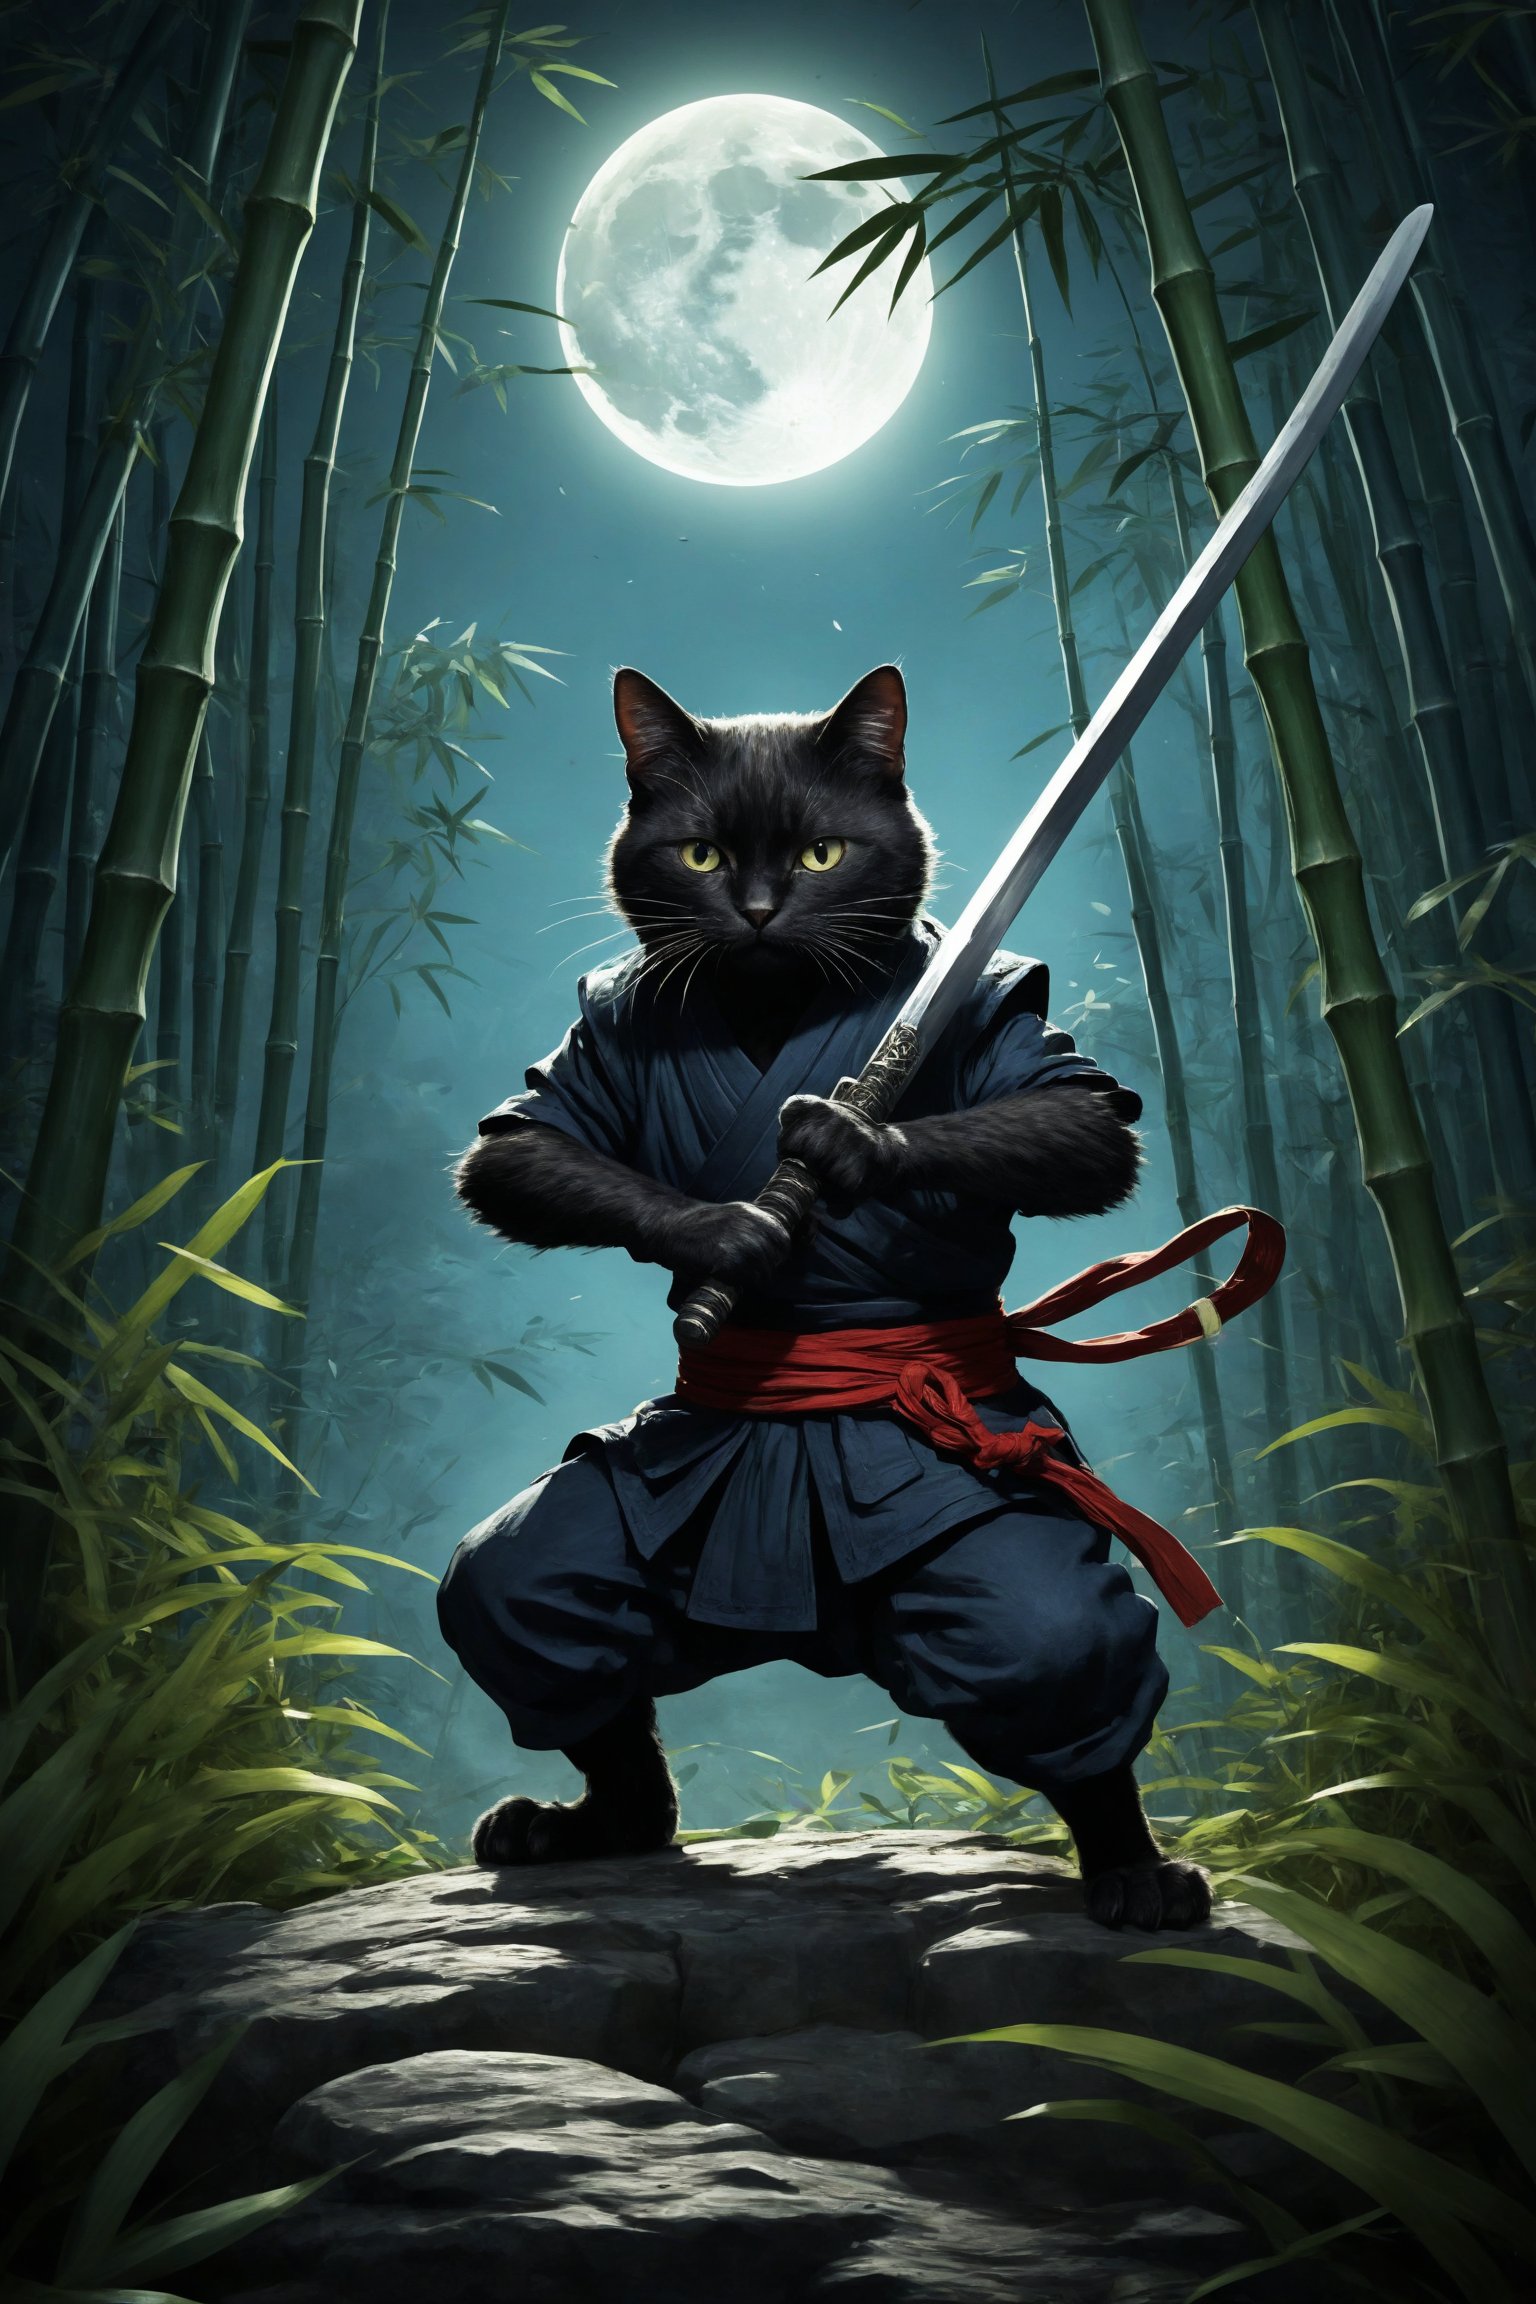 A ninja cat crouches, wielding a ninja sword, in a bamboo forest under moonlight.